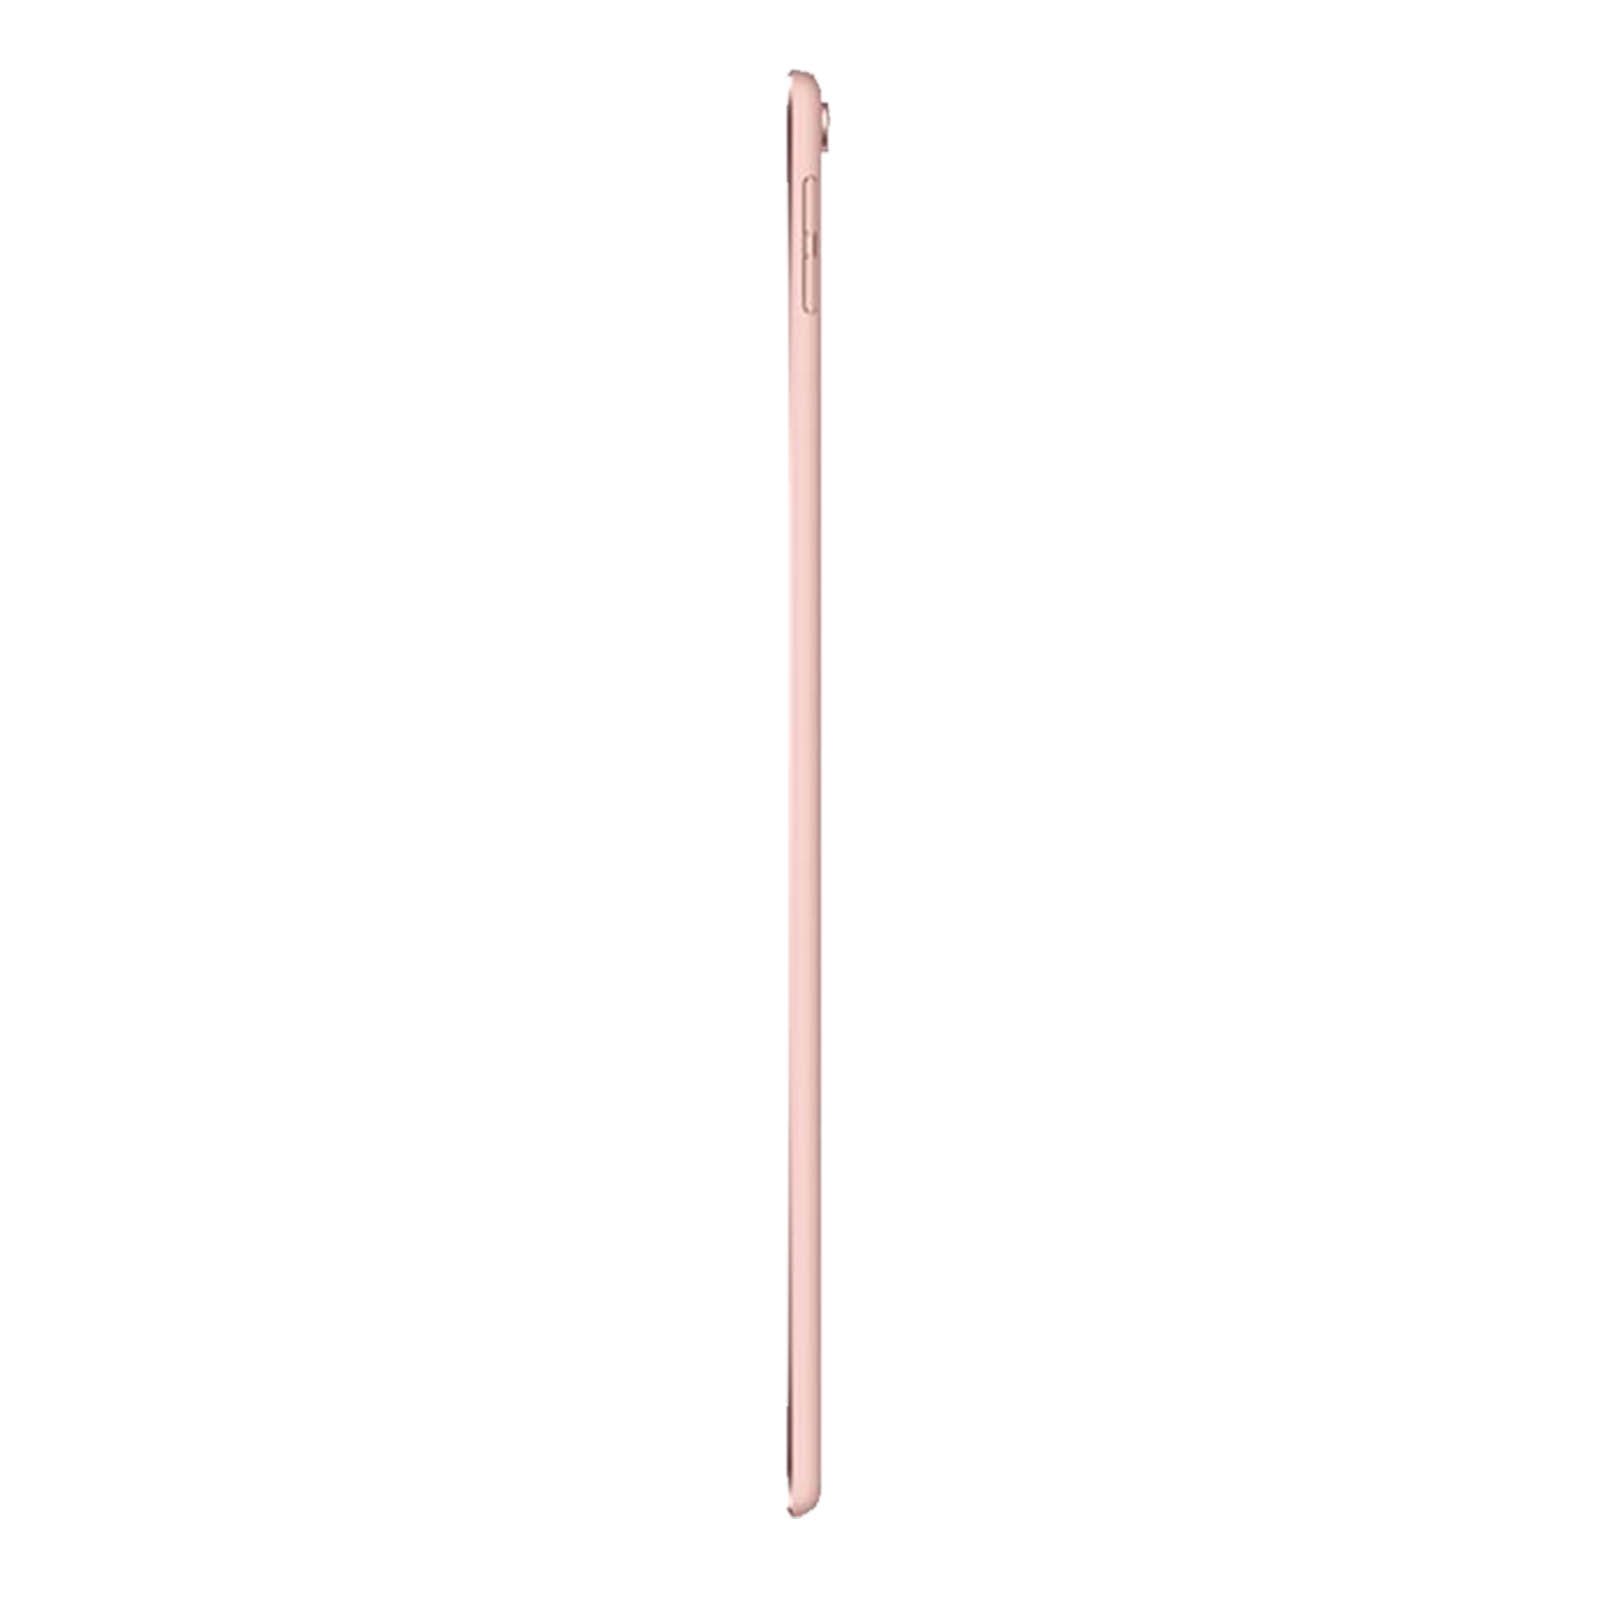 iPad Pro 10.5 Inch 64GB Rose Gold Pristine - Unlocked